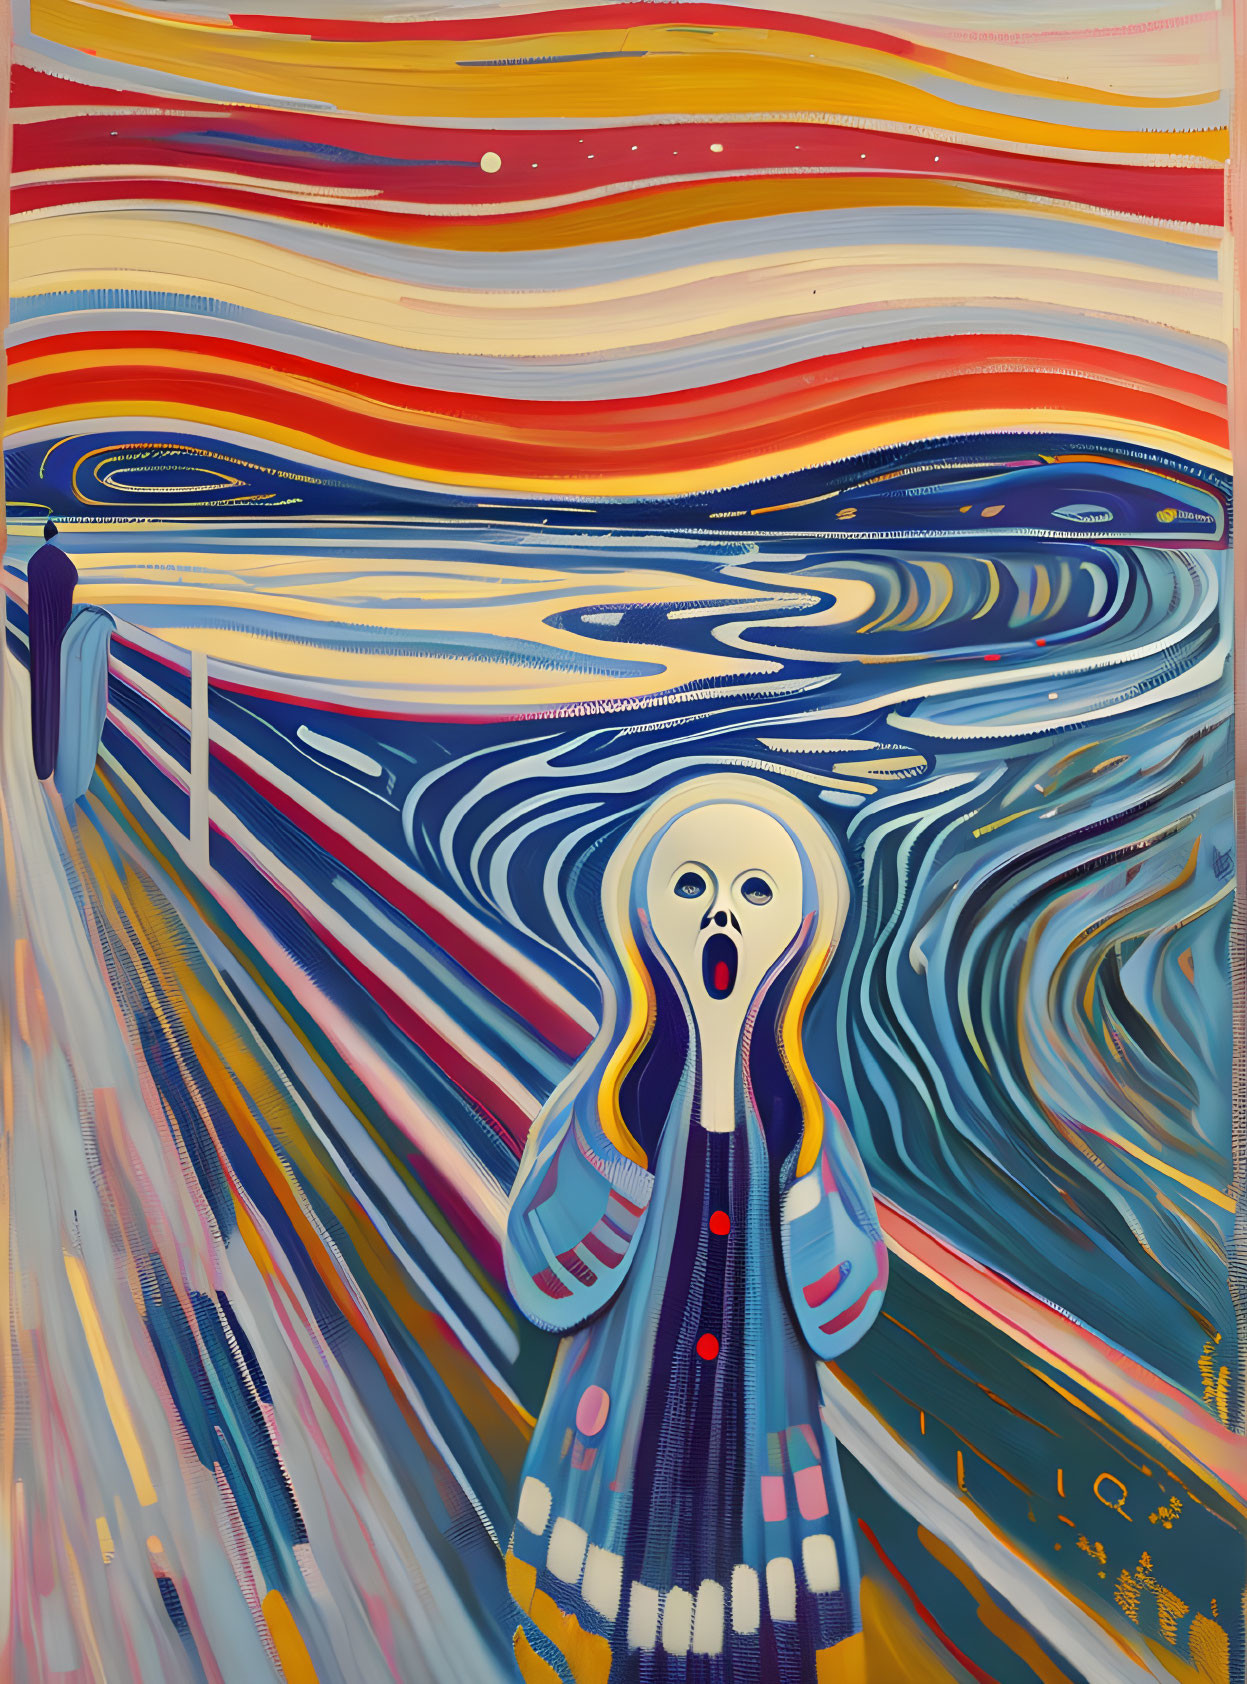 Abstract reinterpretation of "The Scream" with multicolored swirls.